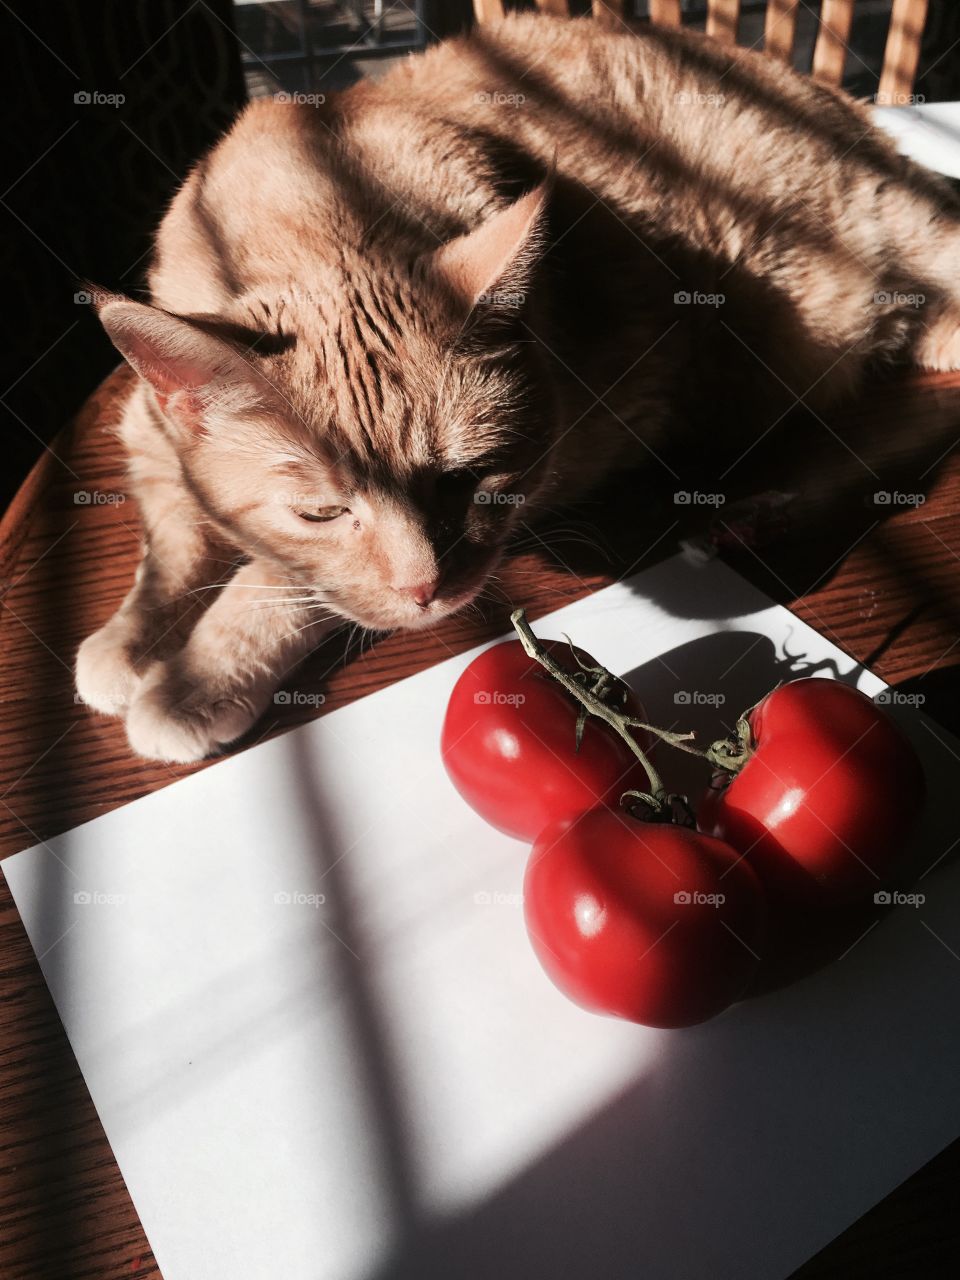 Tomatoes 